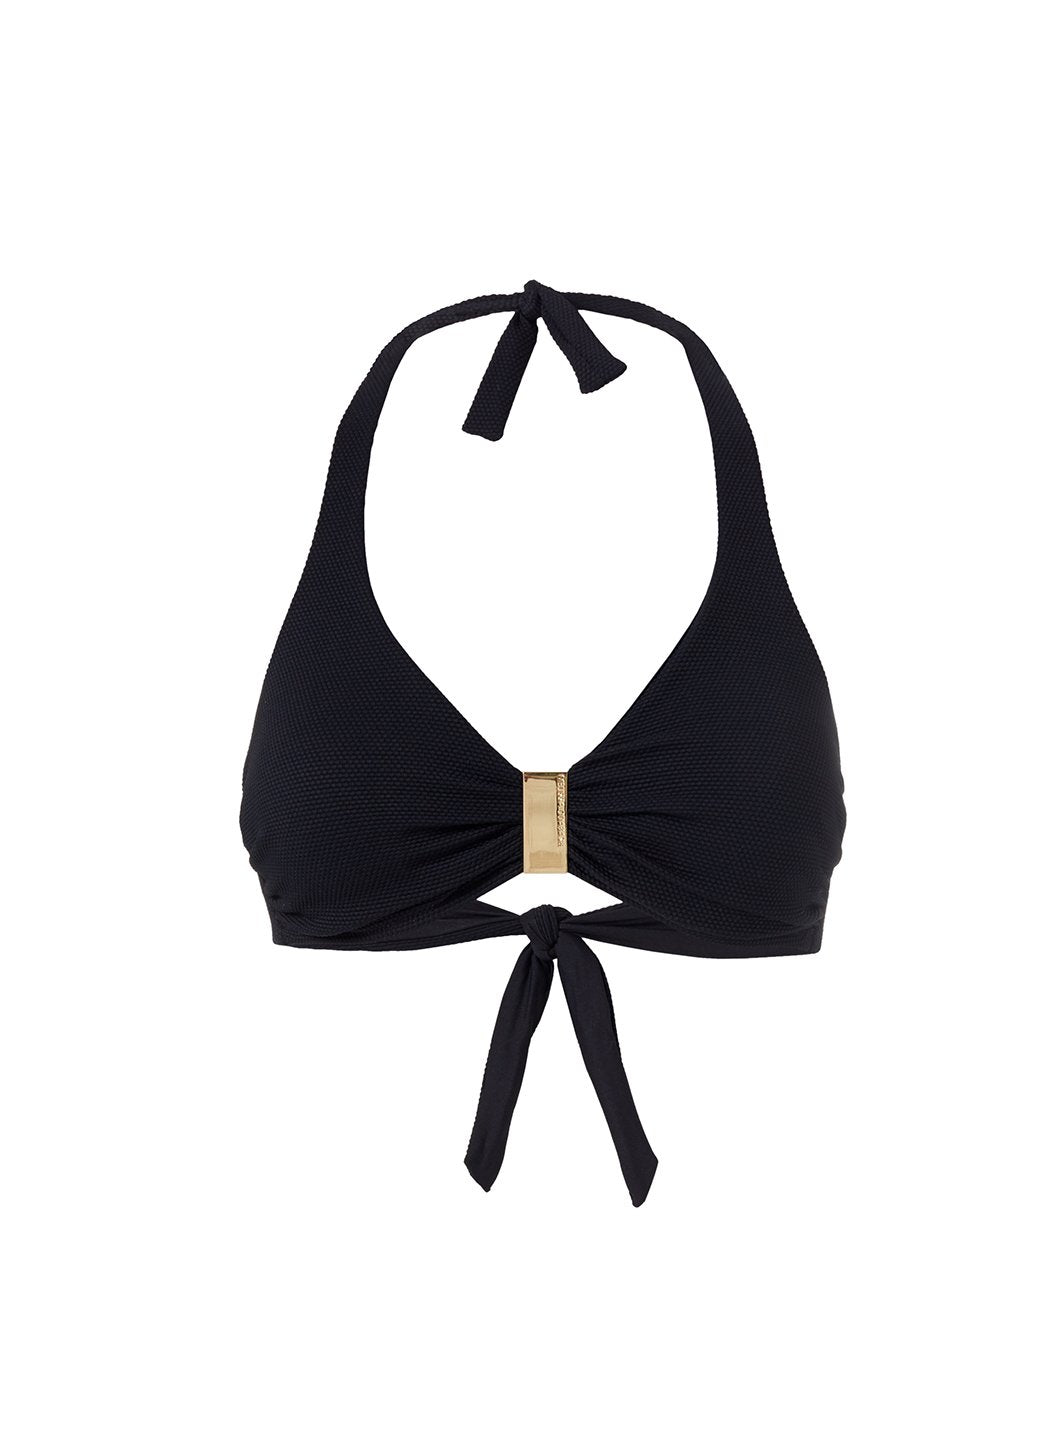 Provence Black Pique Bikini Top